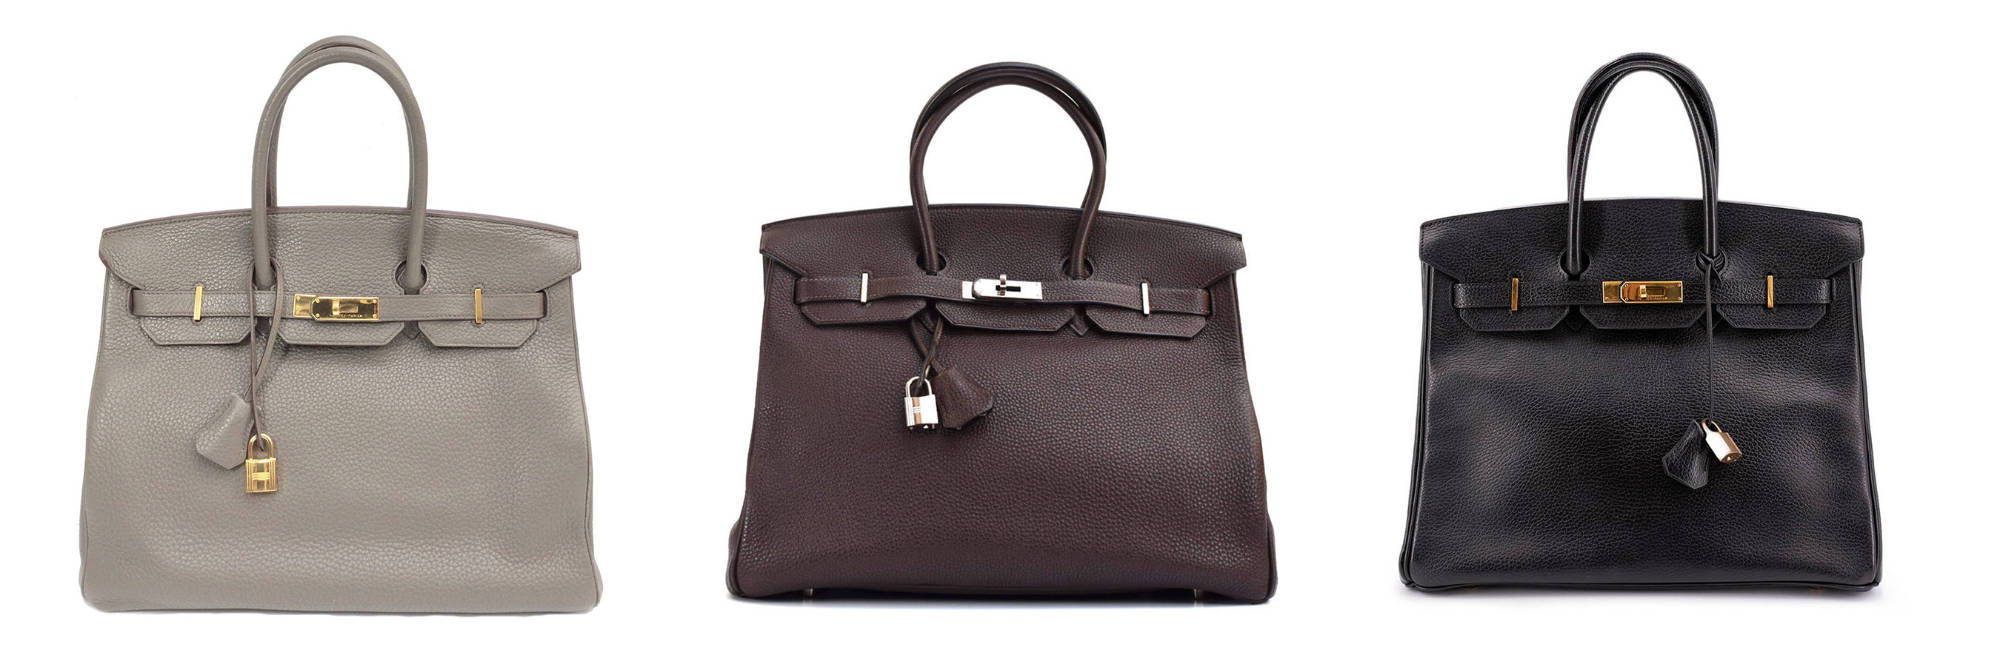 Used Hermes Birkin Handbags